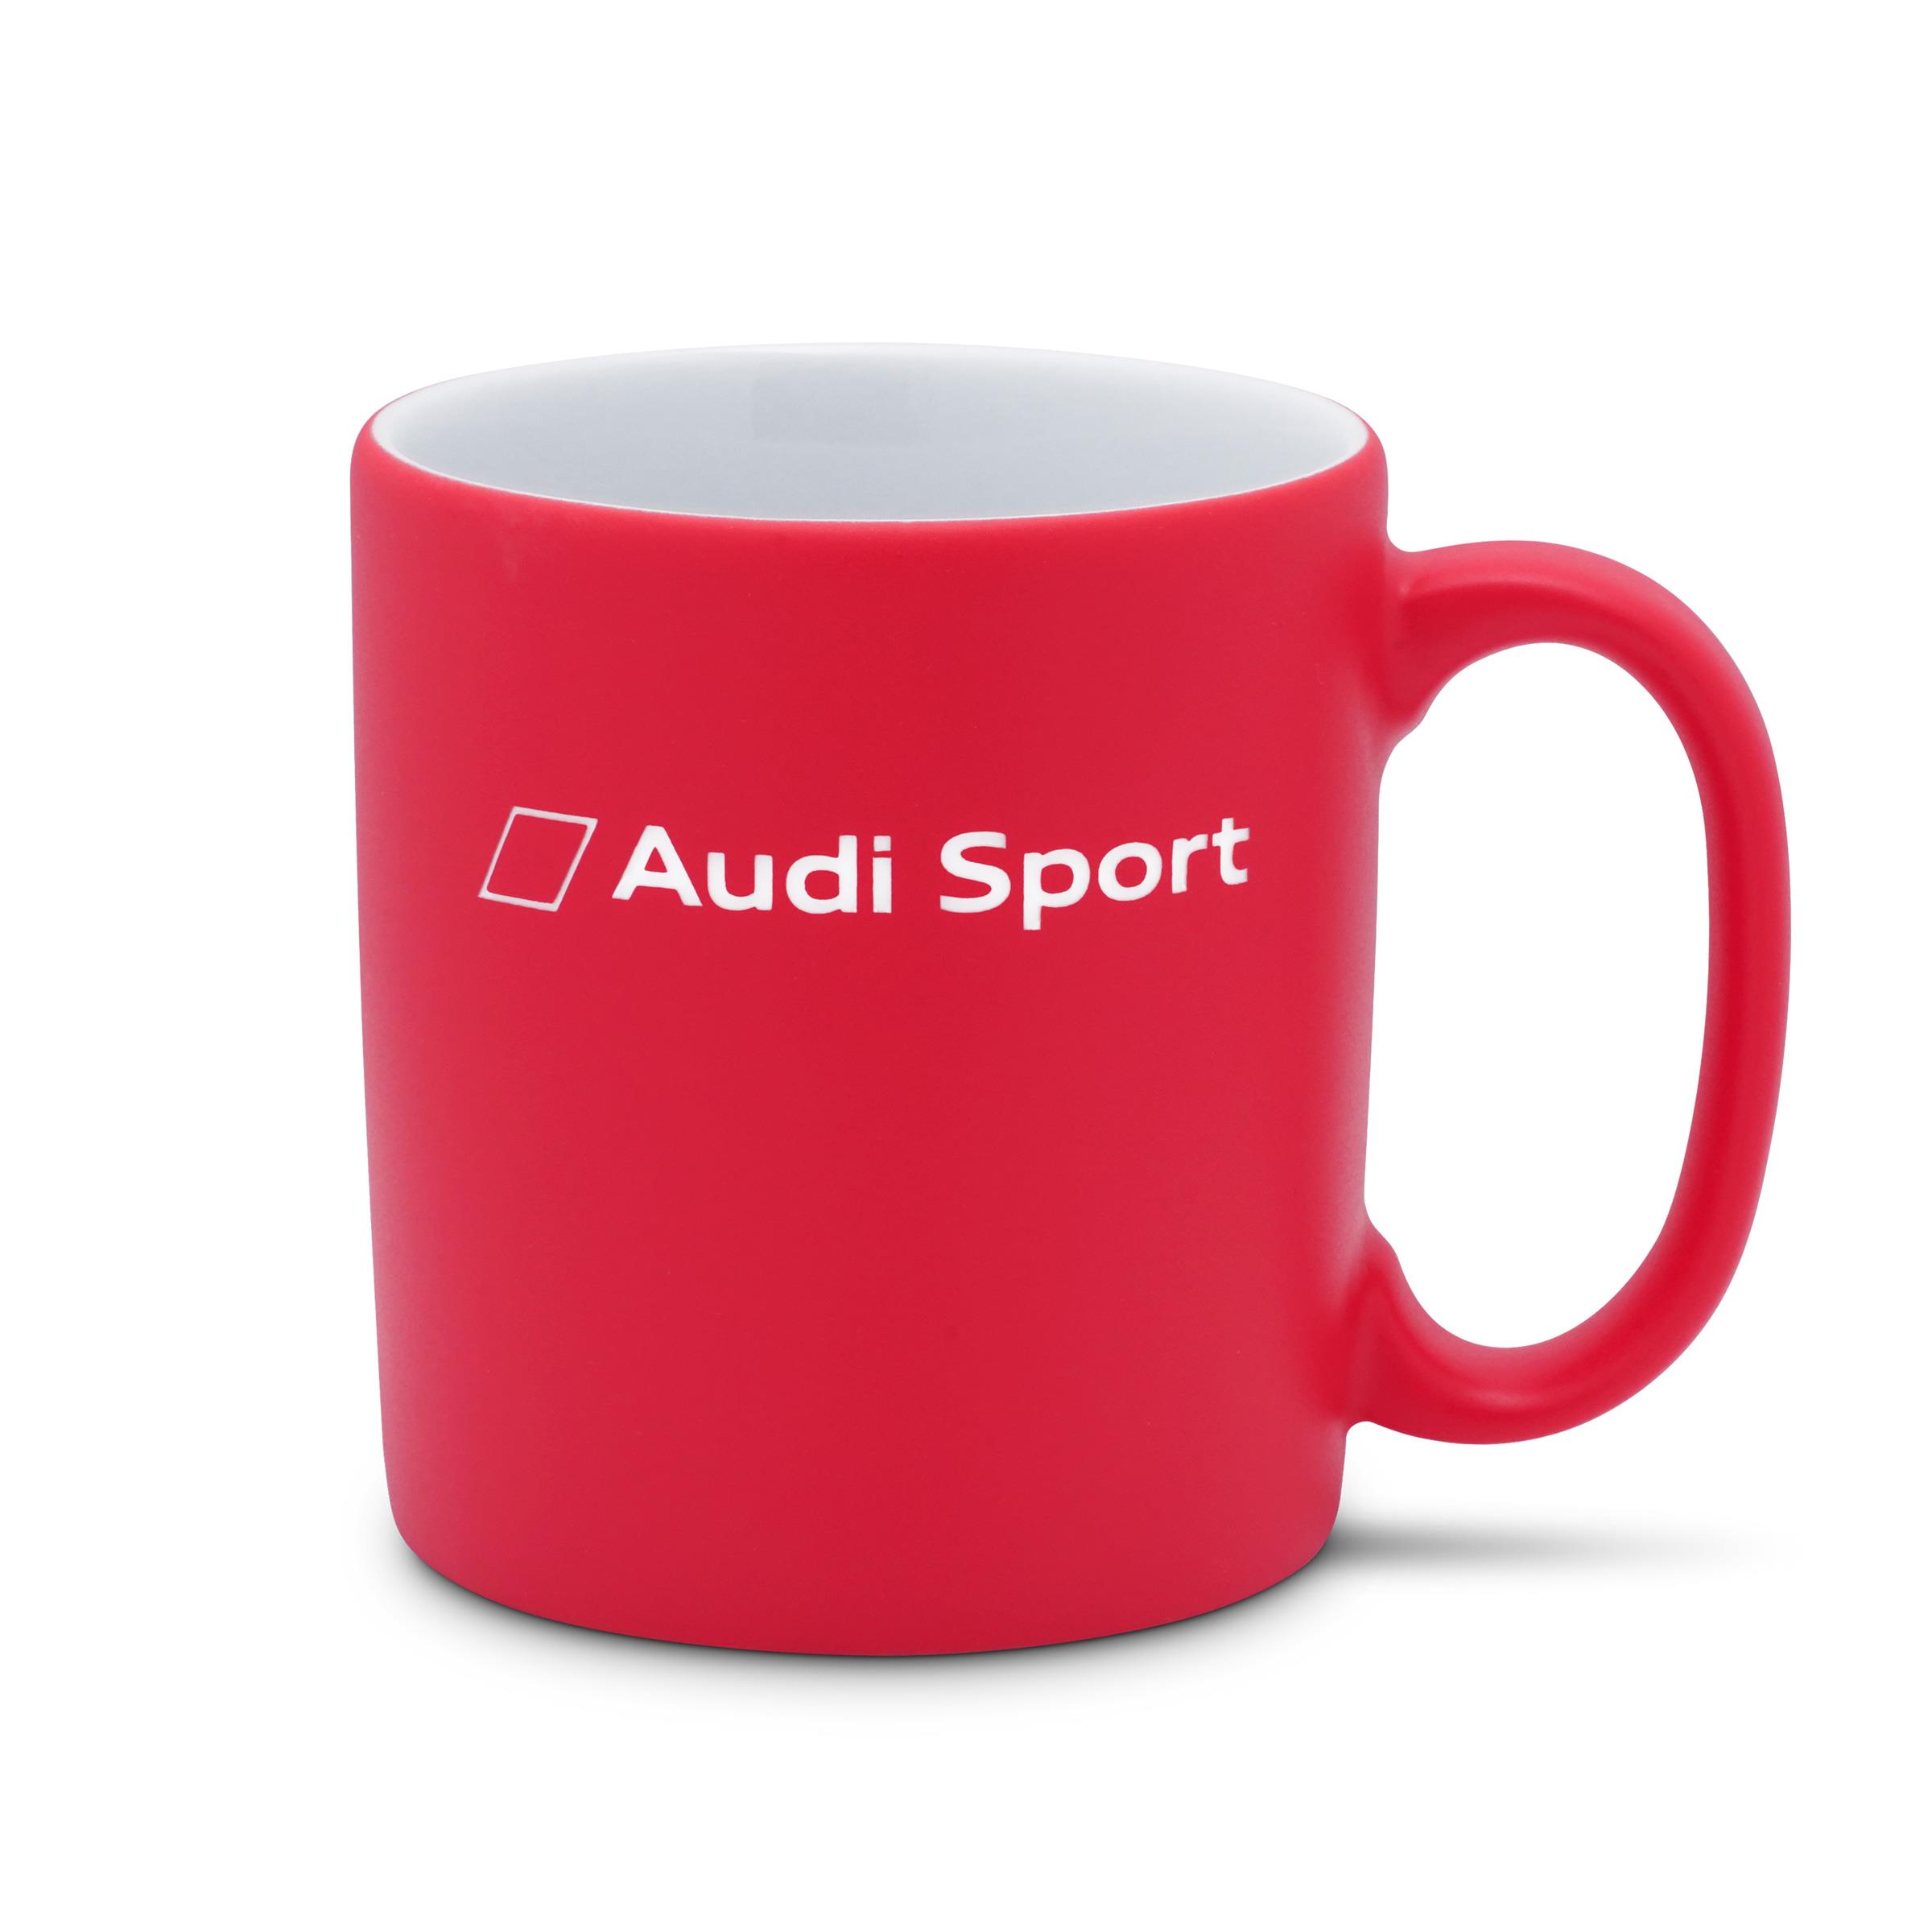 Audi Sport Tasse Rot 3292200100